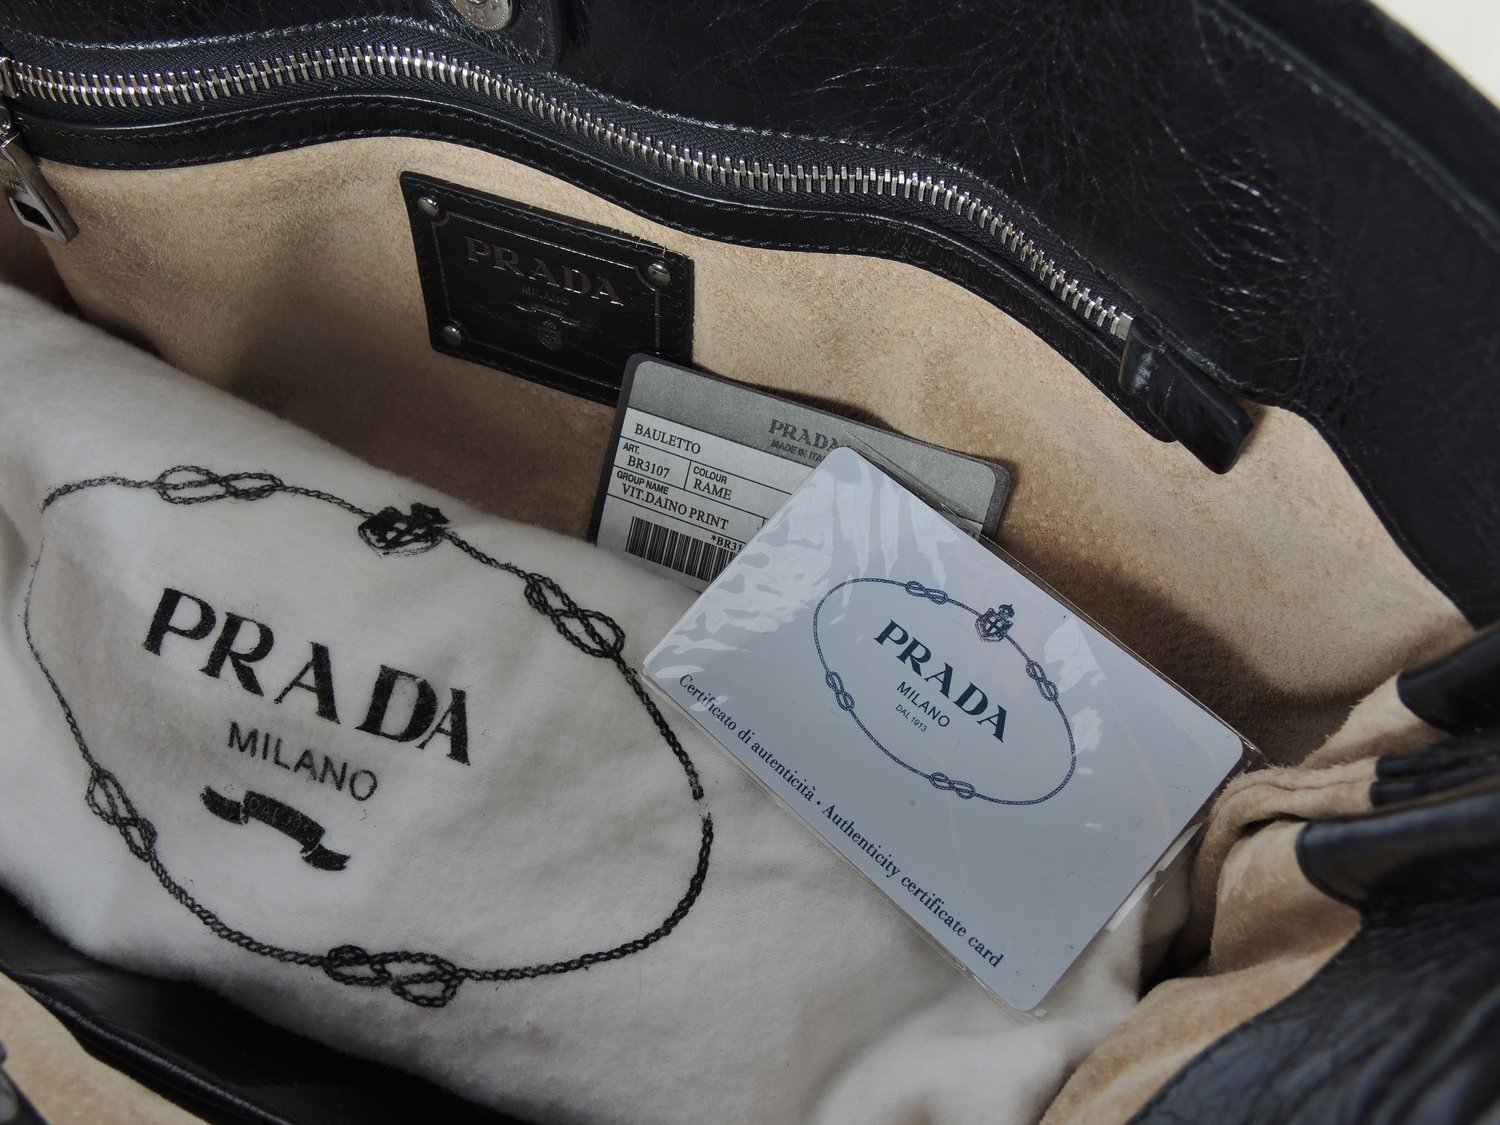 PRADA Black Fringe Shoulder Bag — Seams to Fit Women's Consignment